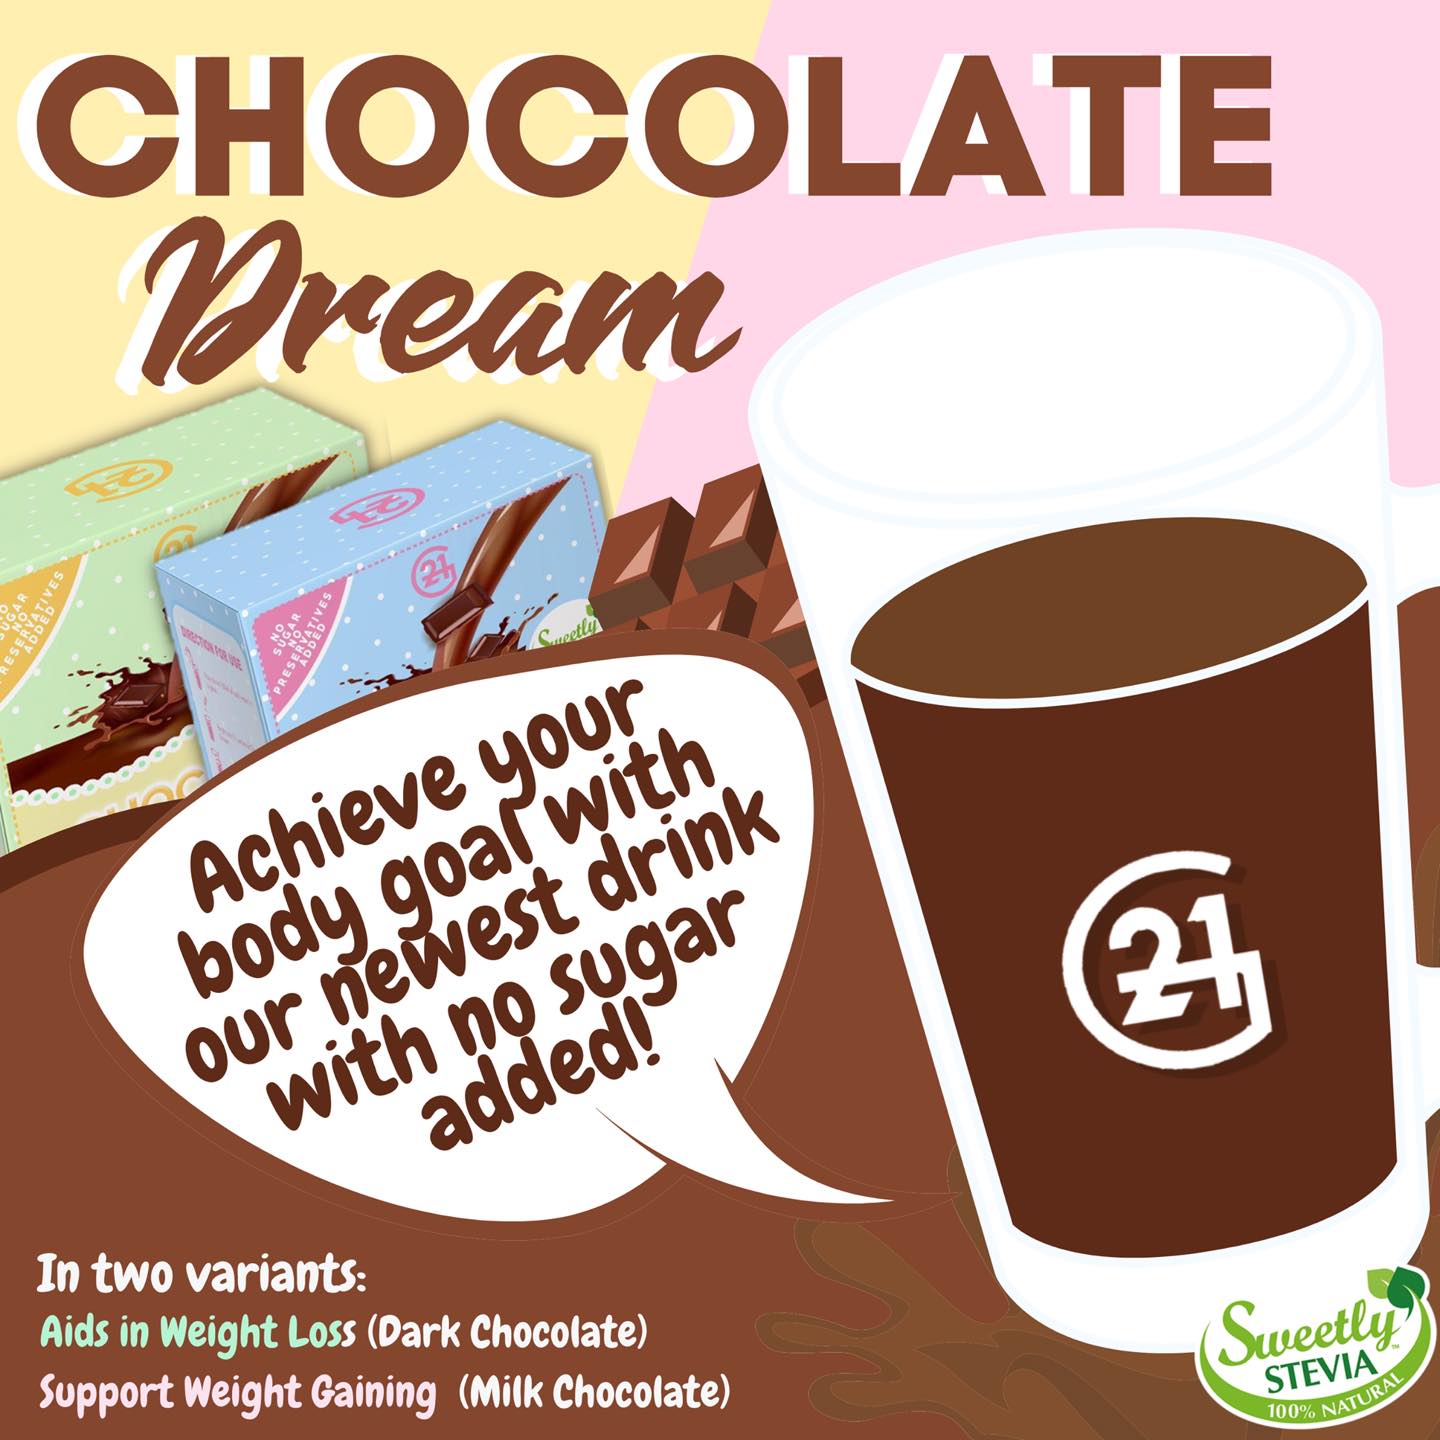 G21 Chocolate Dream Support Gain Weight